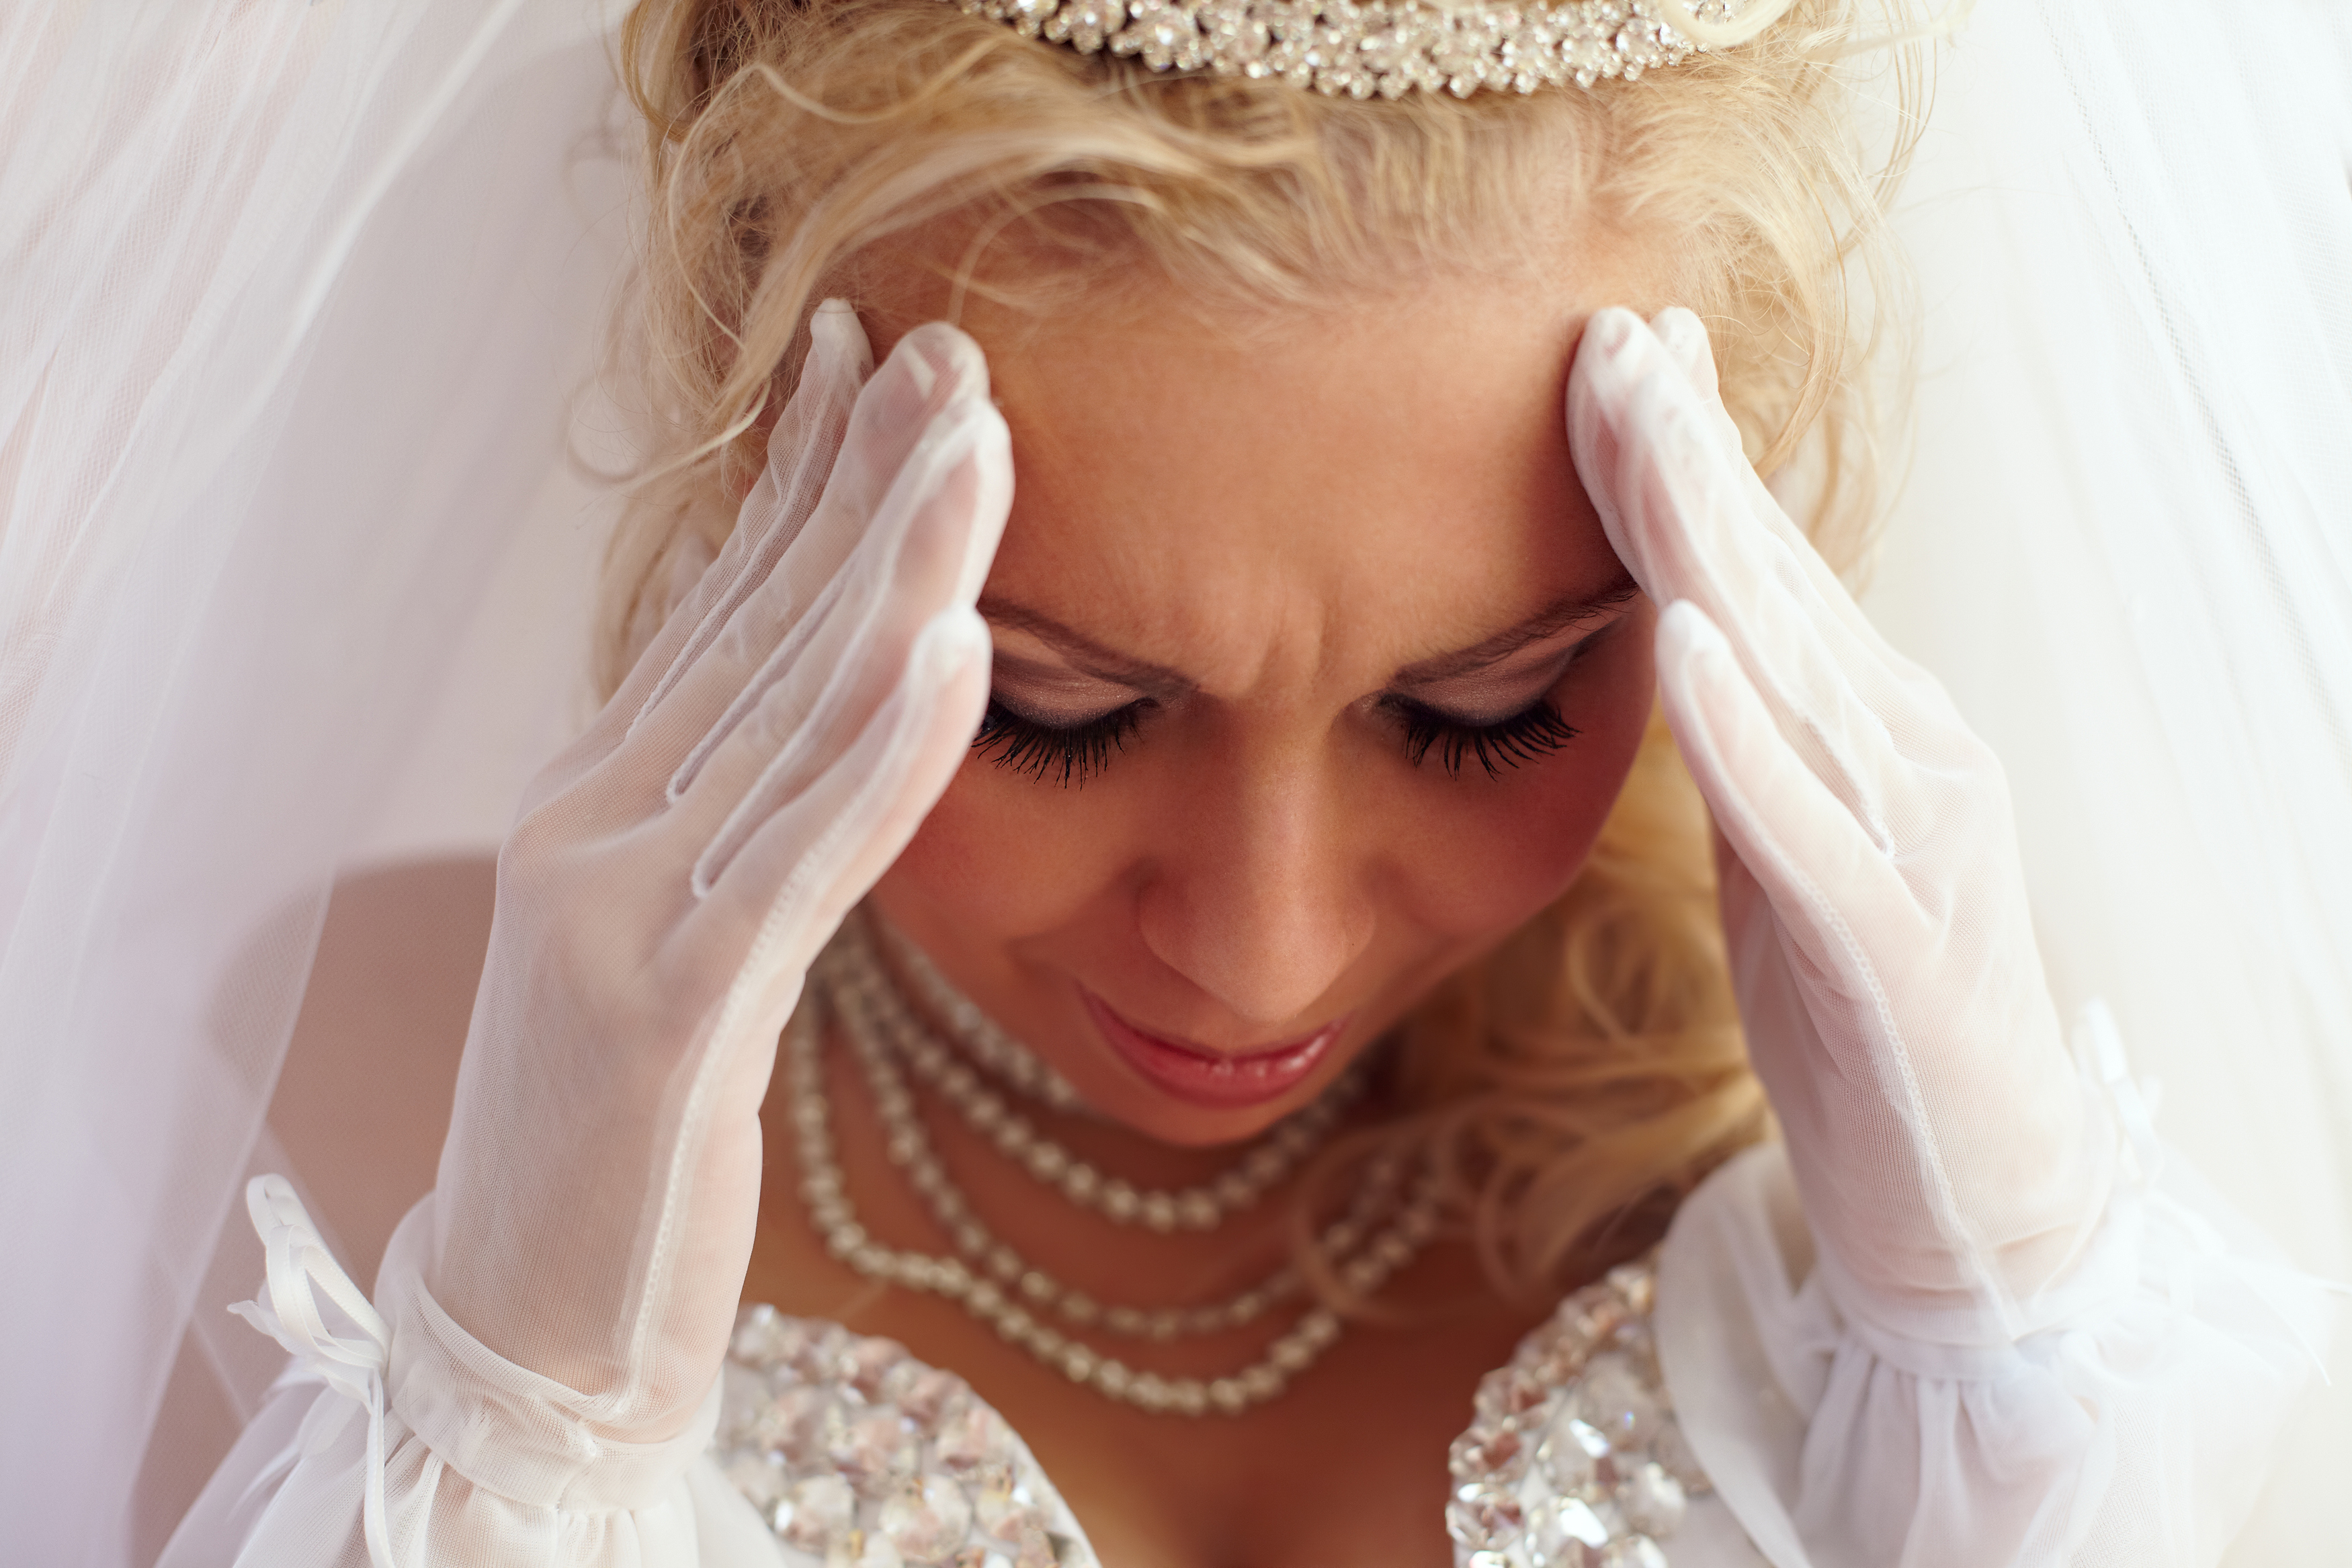 Bridesmaid Praised for Walking Out on Bridezilla During Wedding